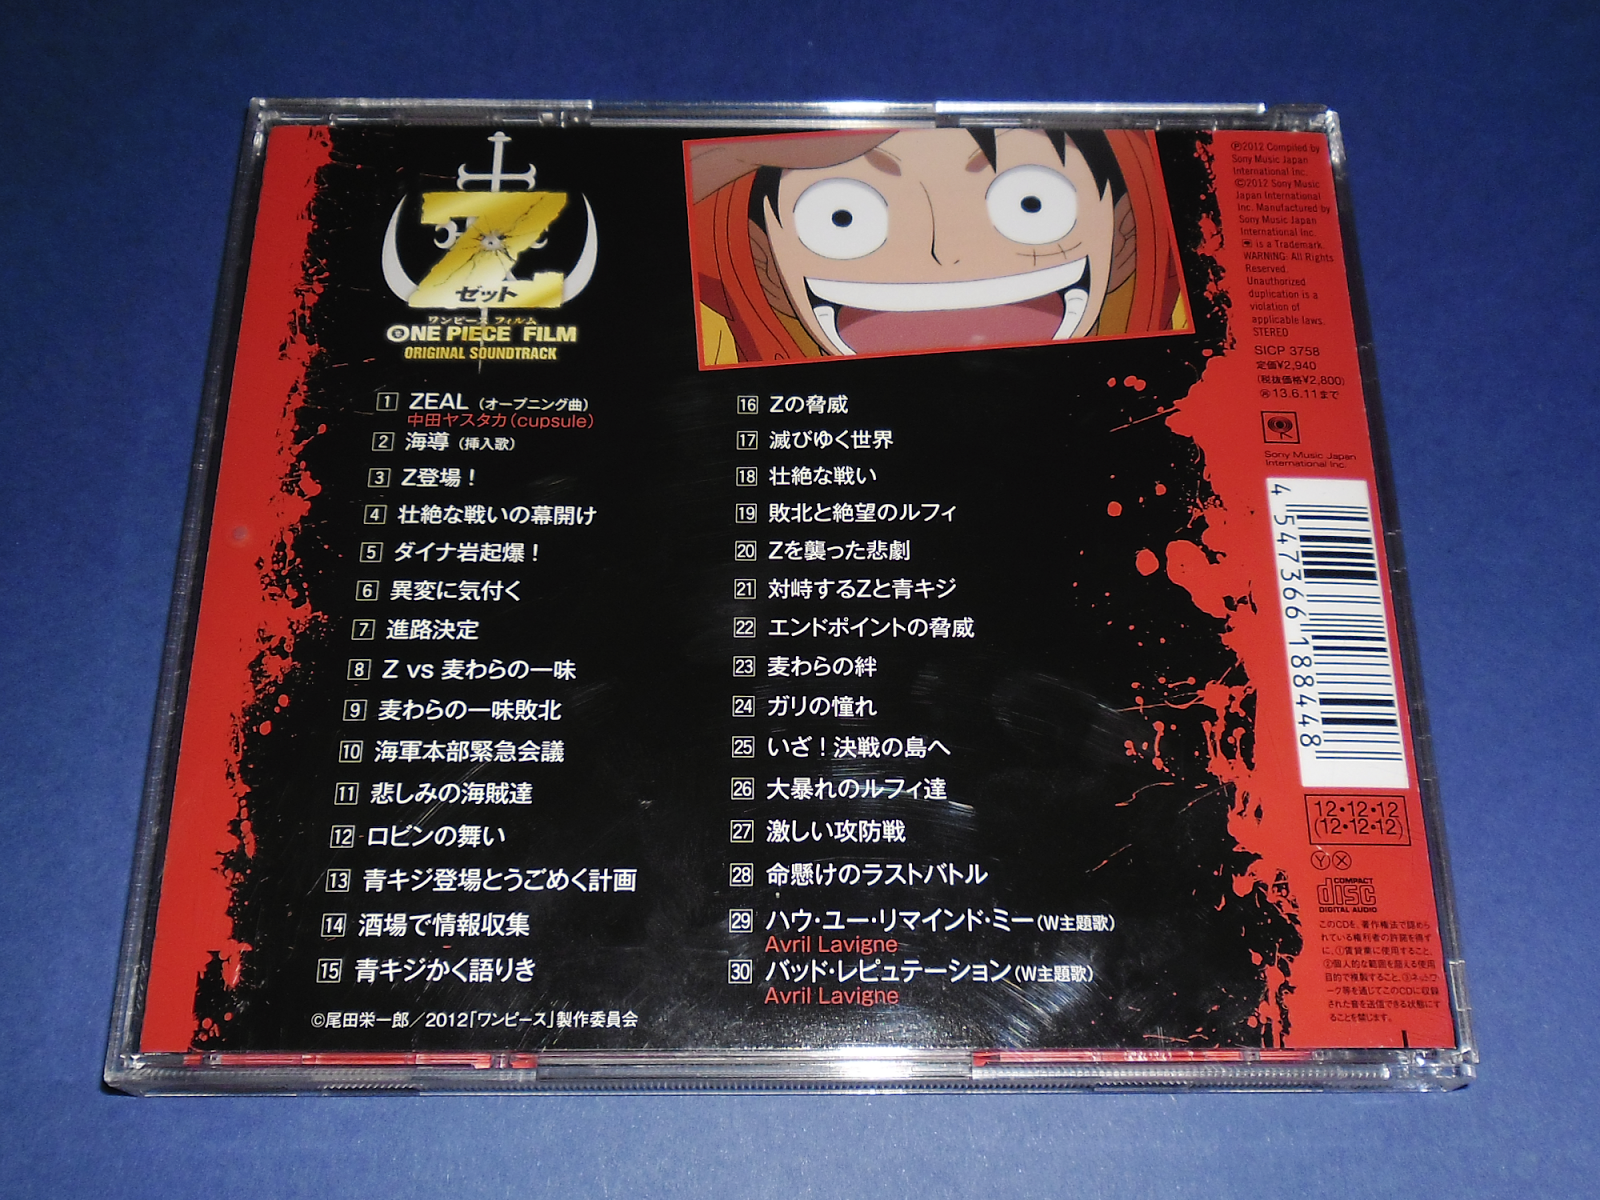 ADRIAN CD COLLECTION: One Piece Film Z - Original Soundtrack